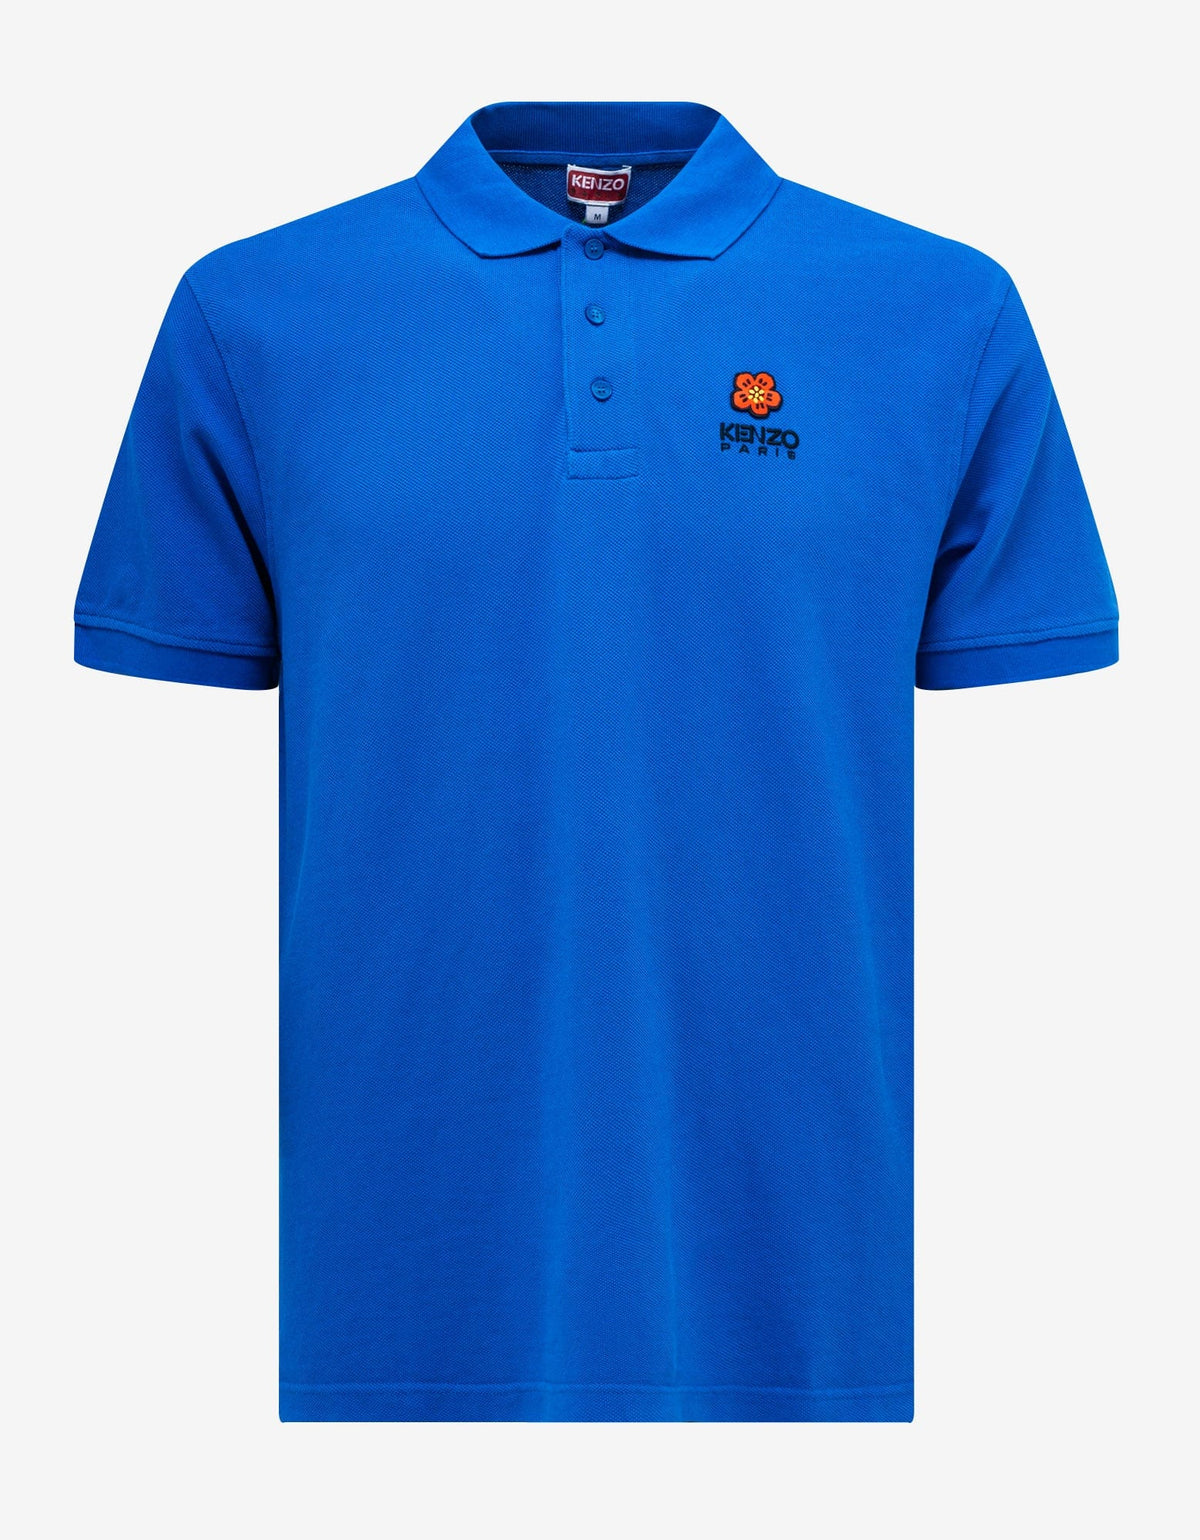 Kenzo Blue 'Boke Flower' Crest Polo T-Shirt